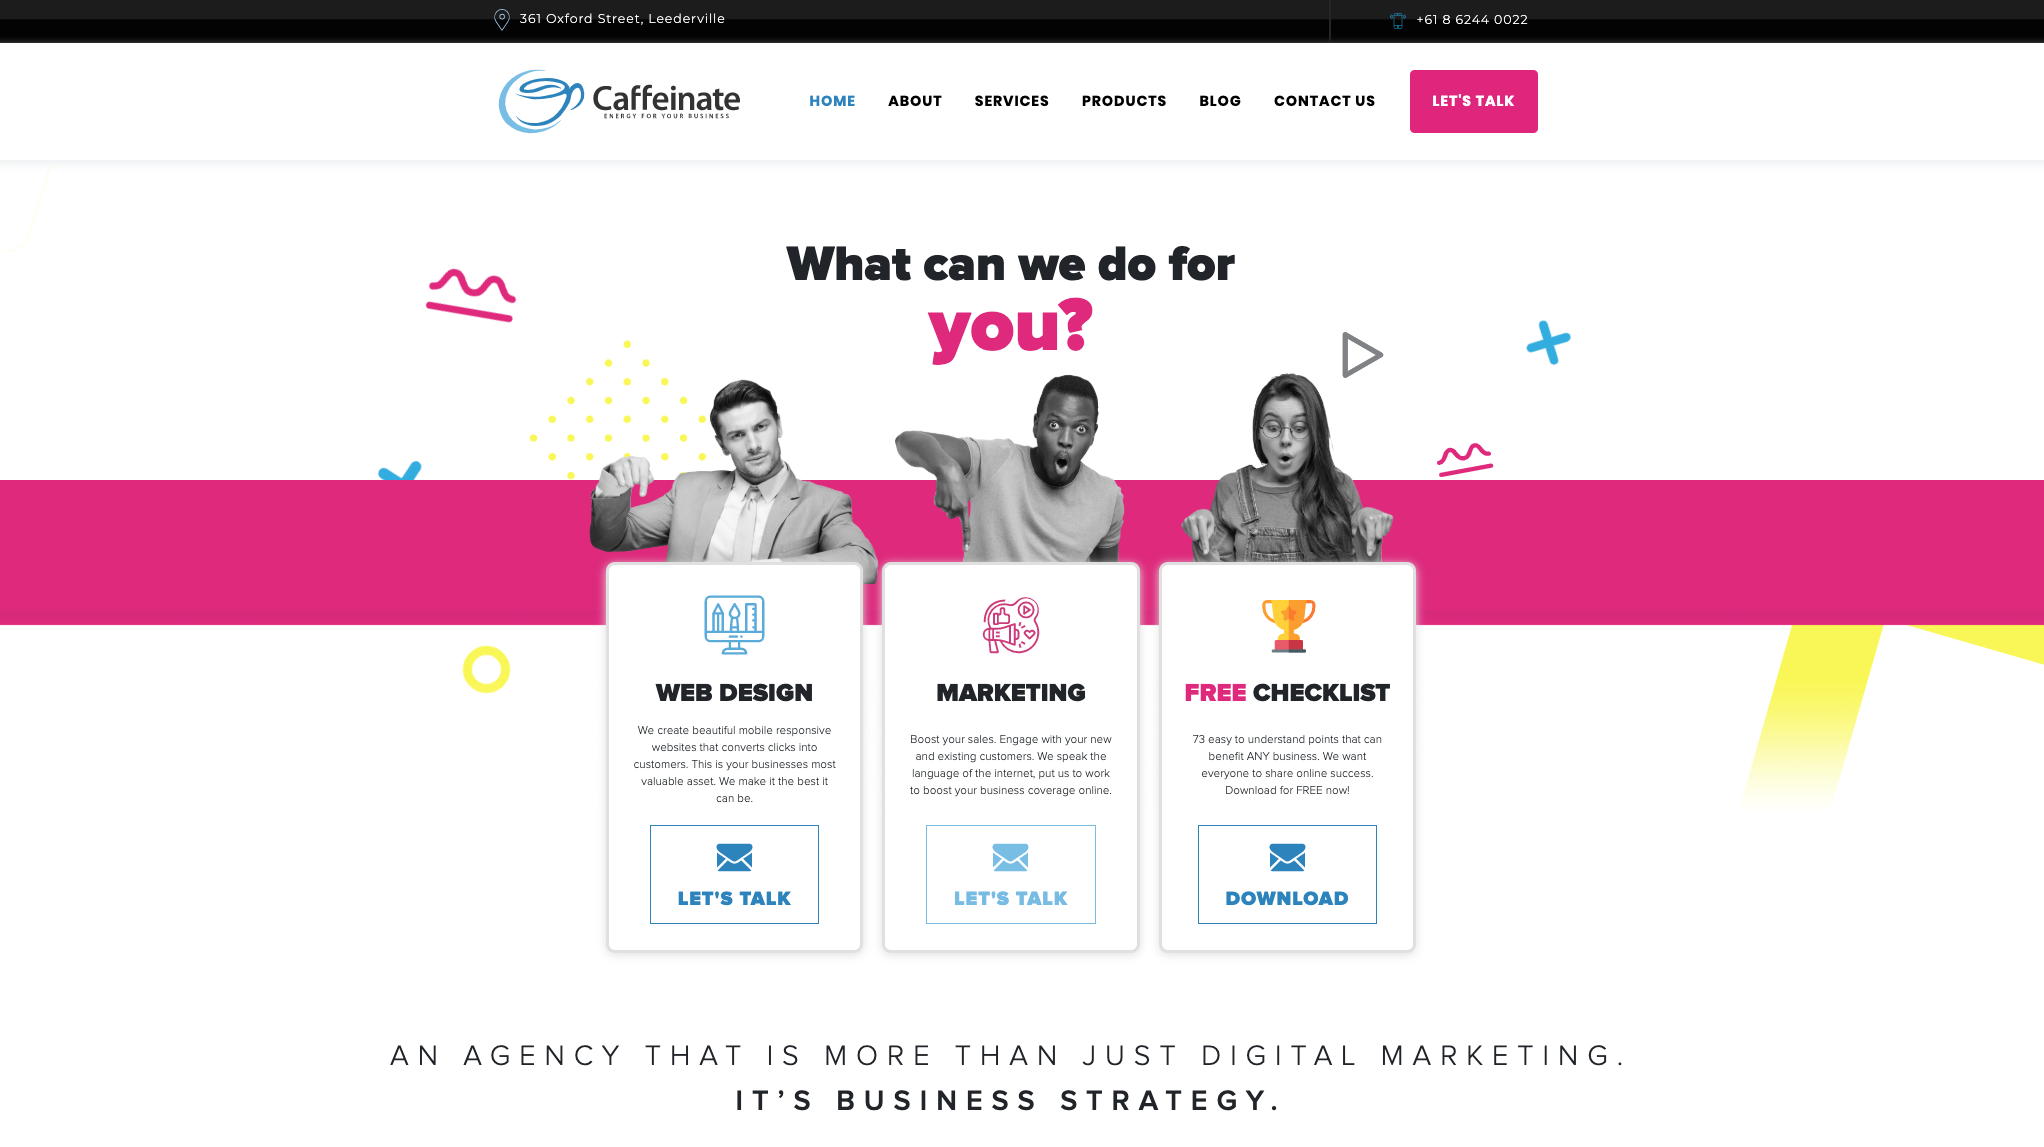 Caffeinate Digital Perth Digital Marketing - Home Page